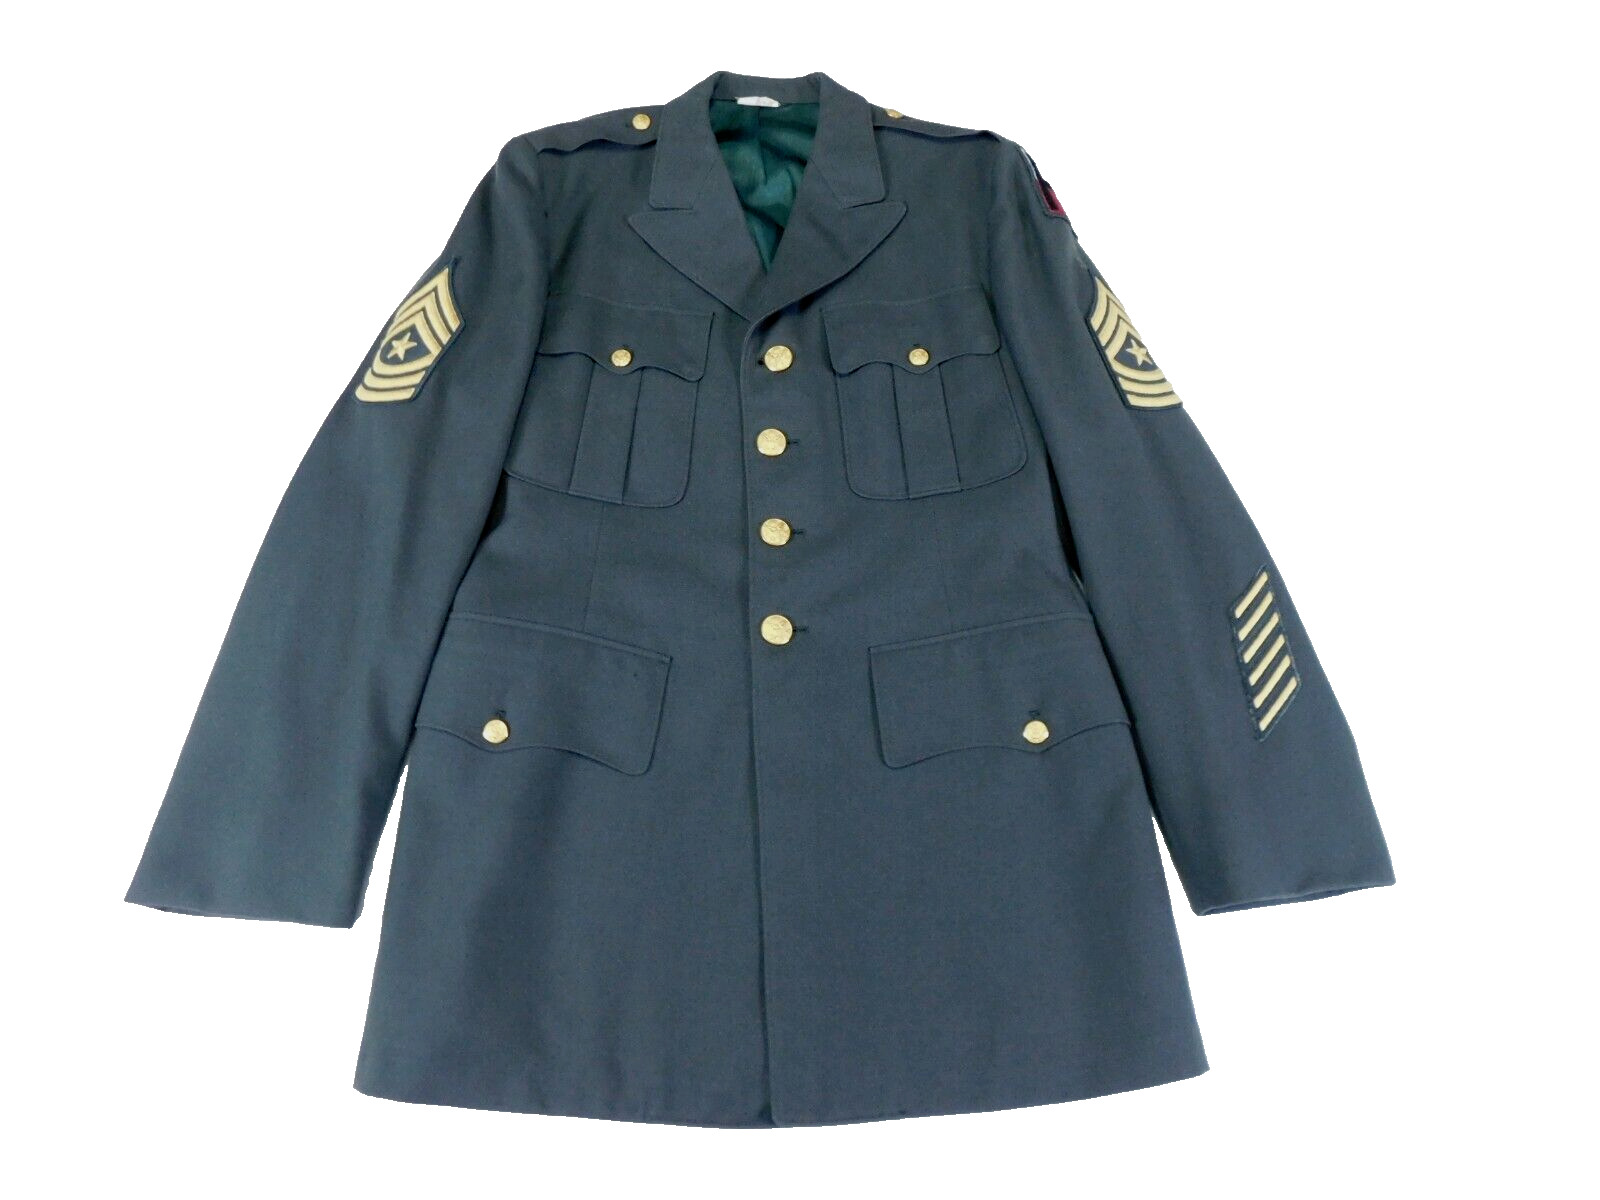 Vintage US 1st Army Green Coat 38 Long SGM Class 3 AG44 Wool Serge Dress Uniform